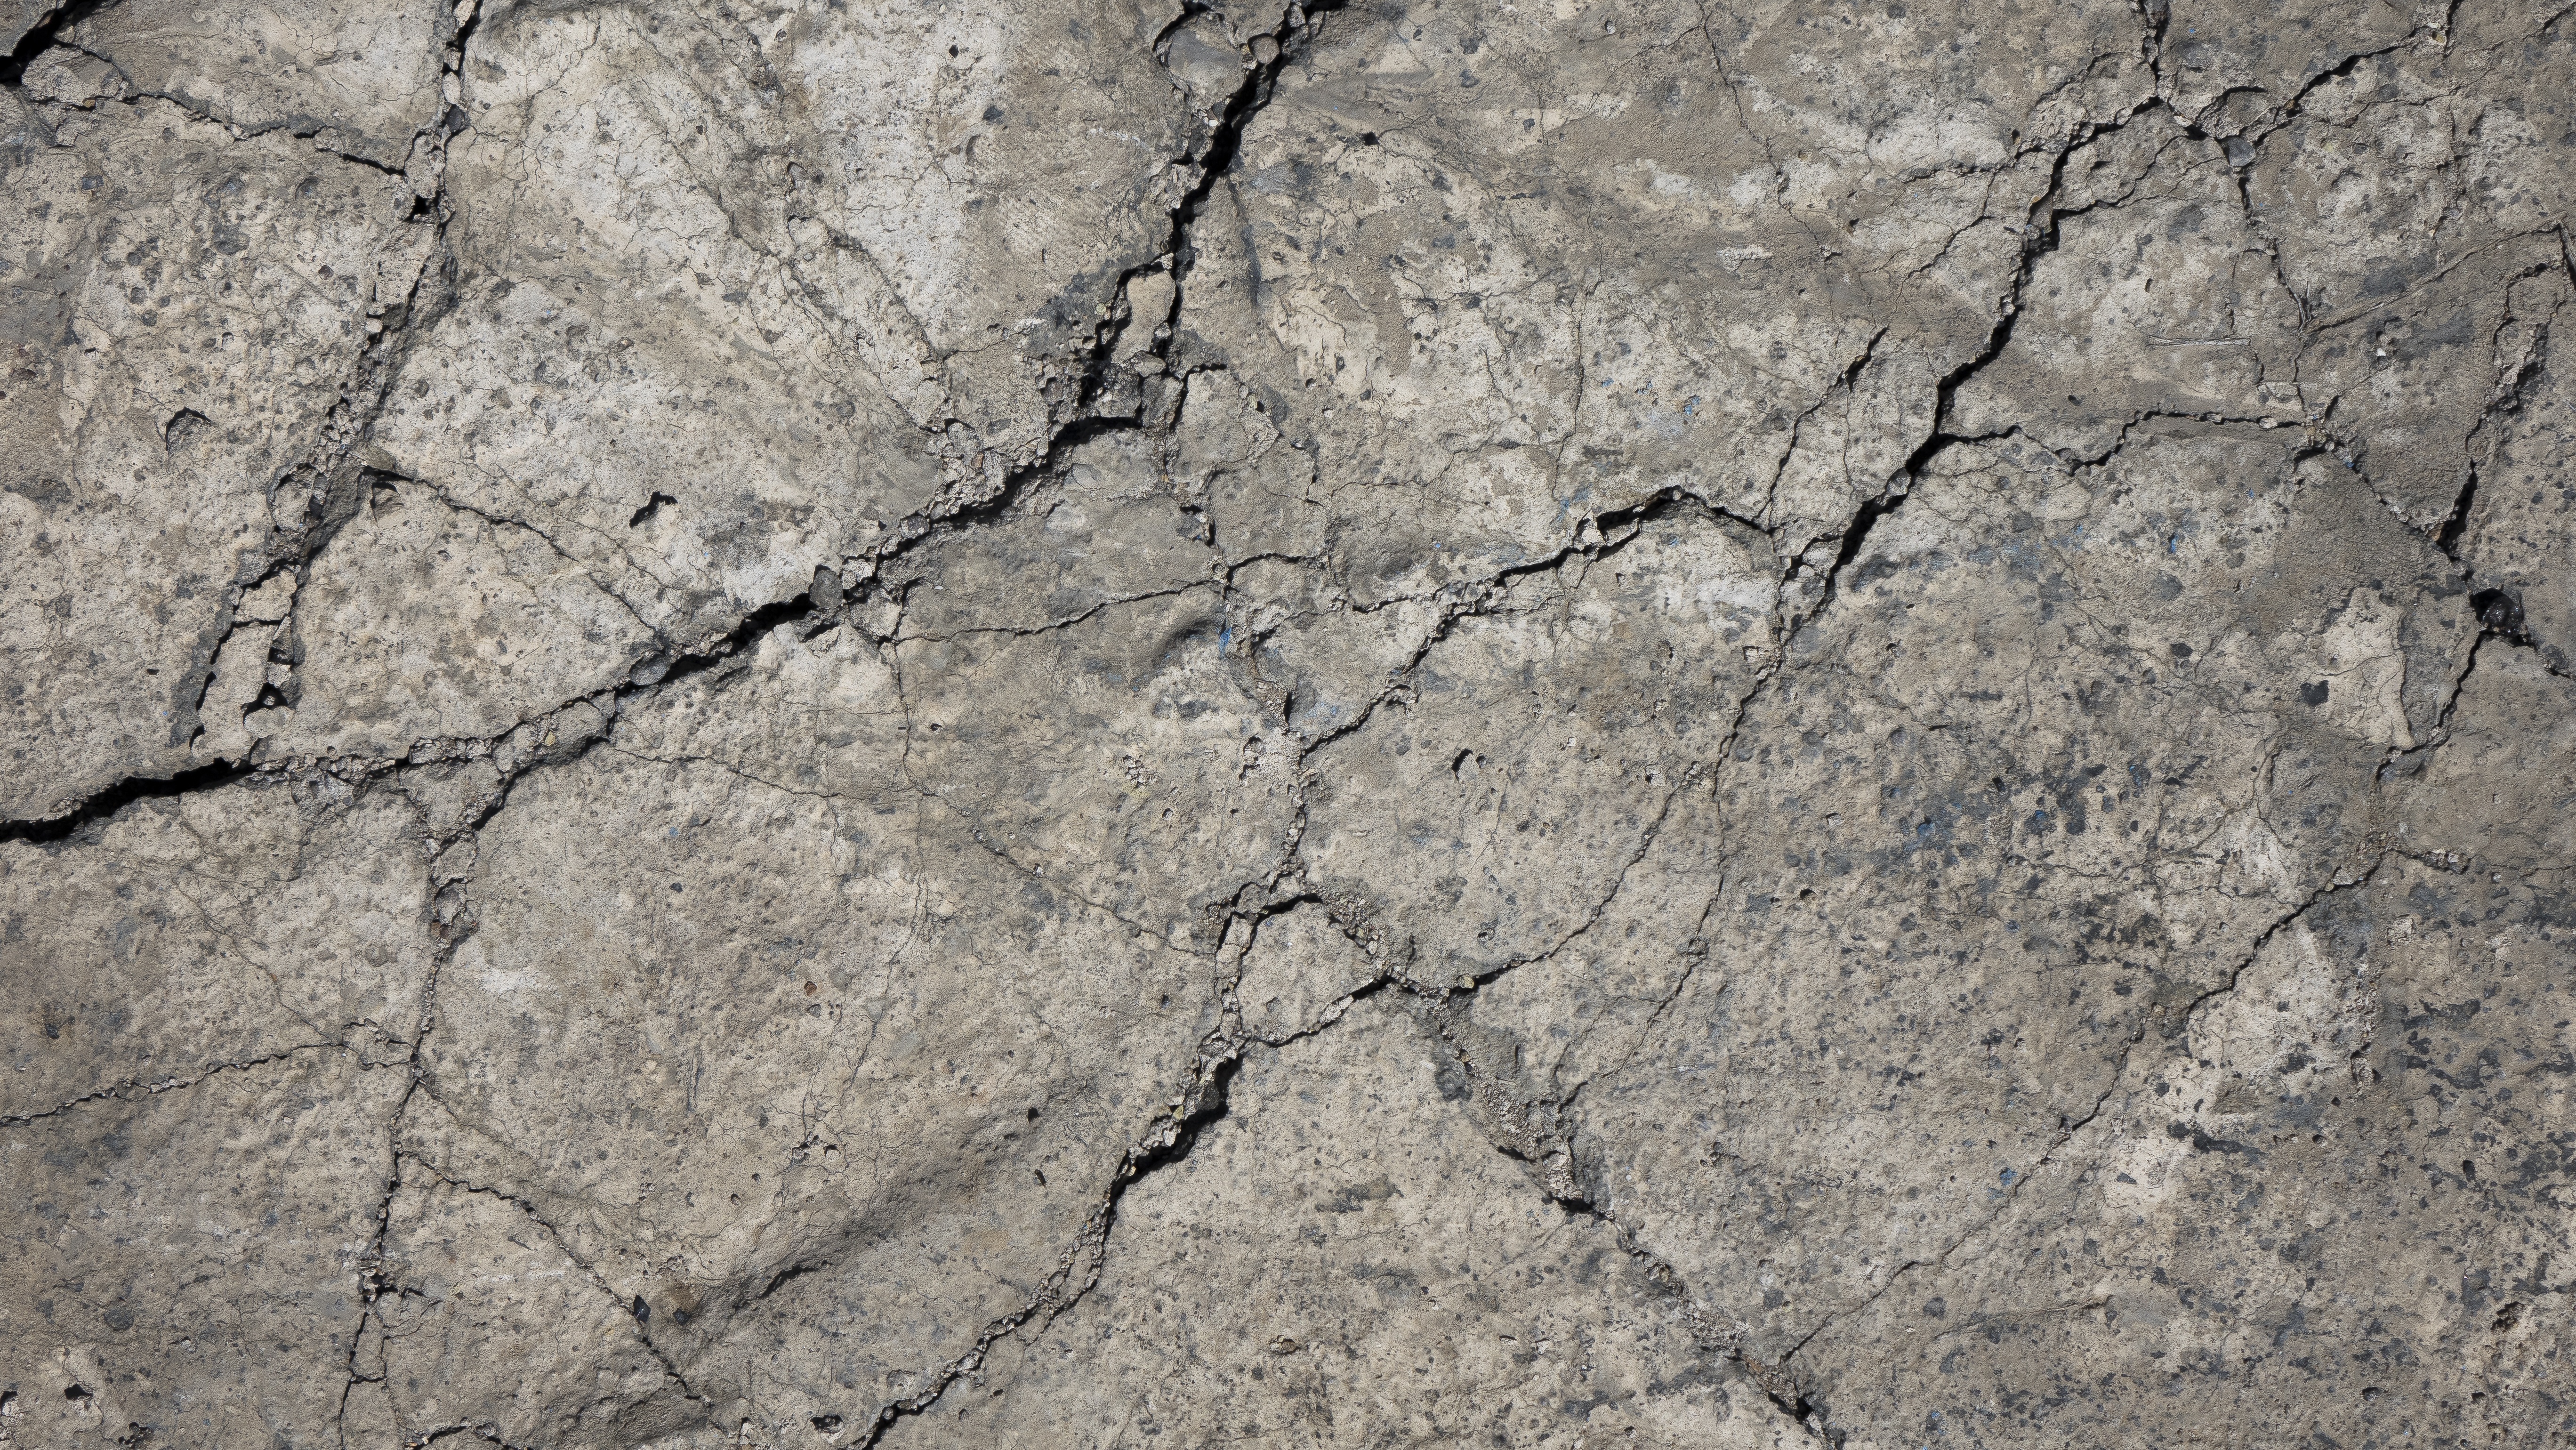 Free Images : rock, texture, floor, asphalt, pavement, soil, grunge ...